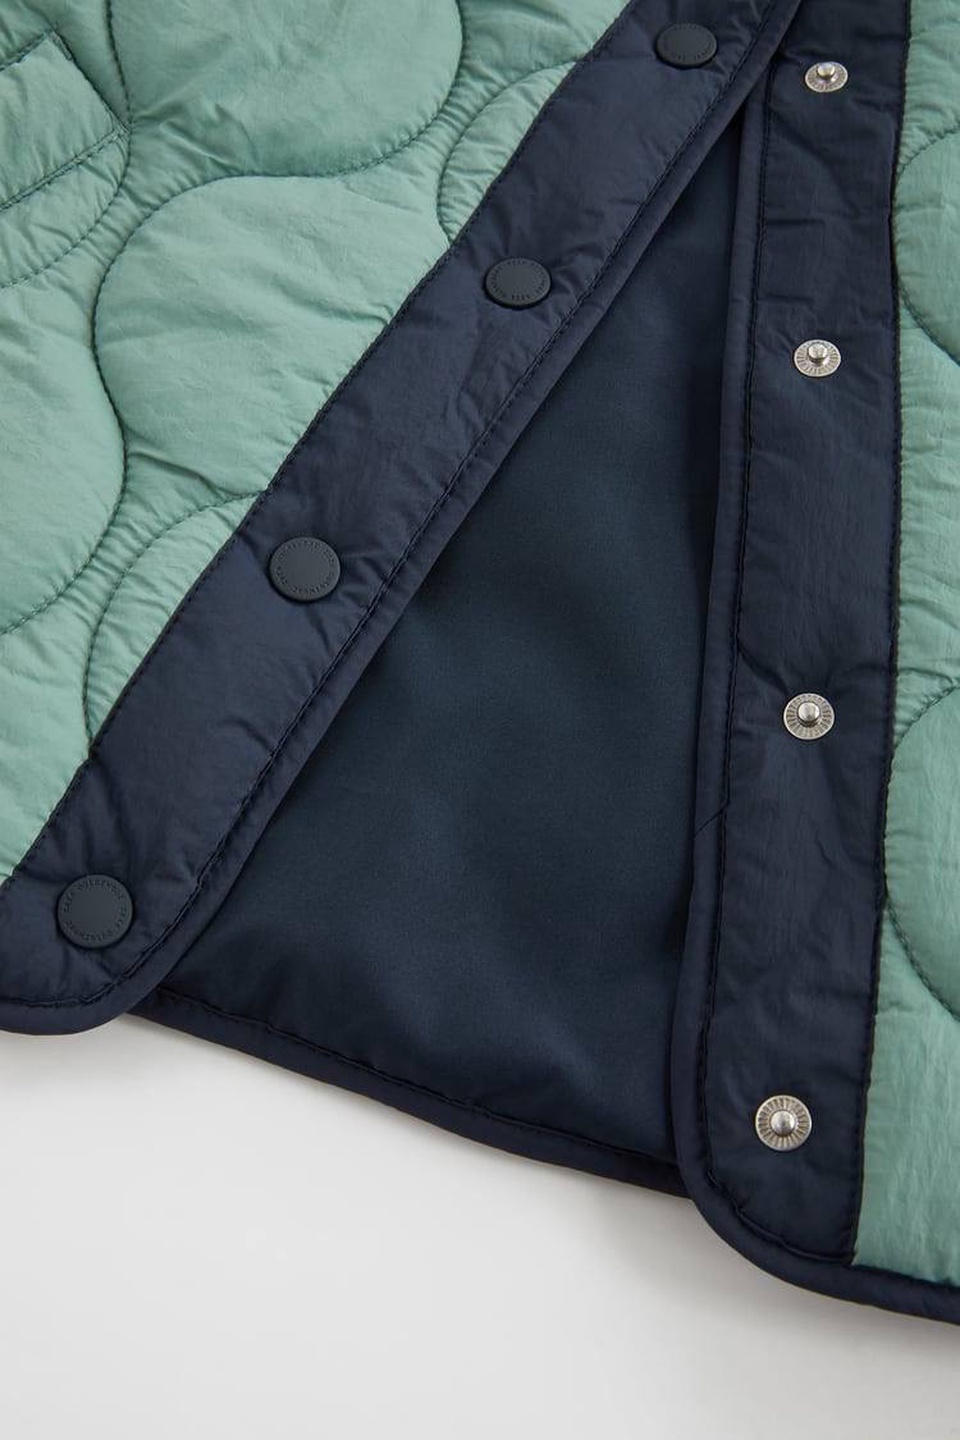 Куртка Zara kids - 2 199 ₽, заказать онлайн.